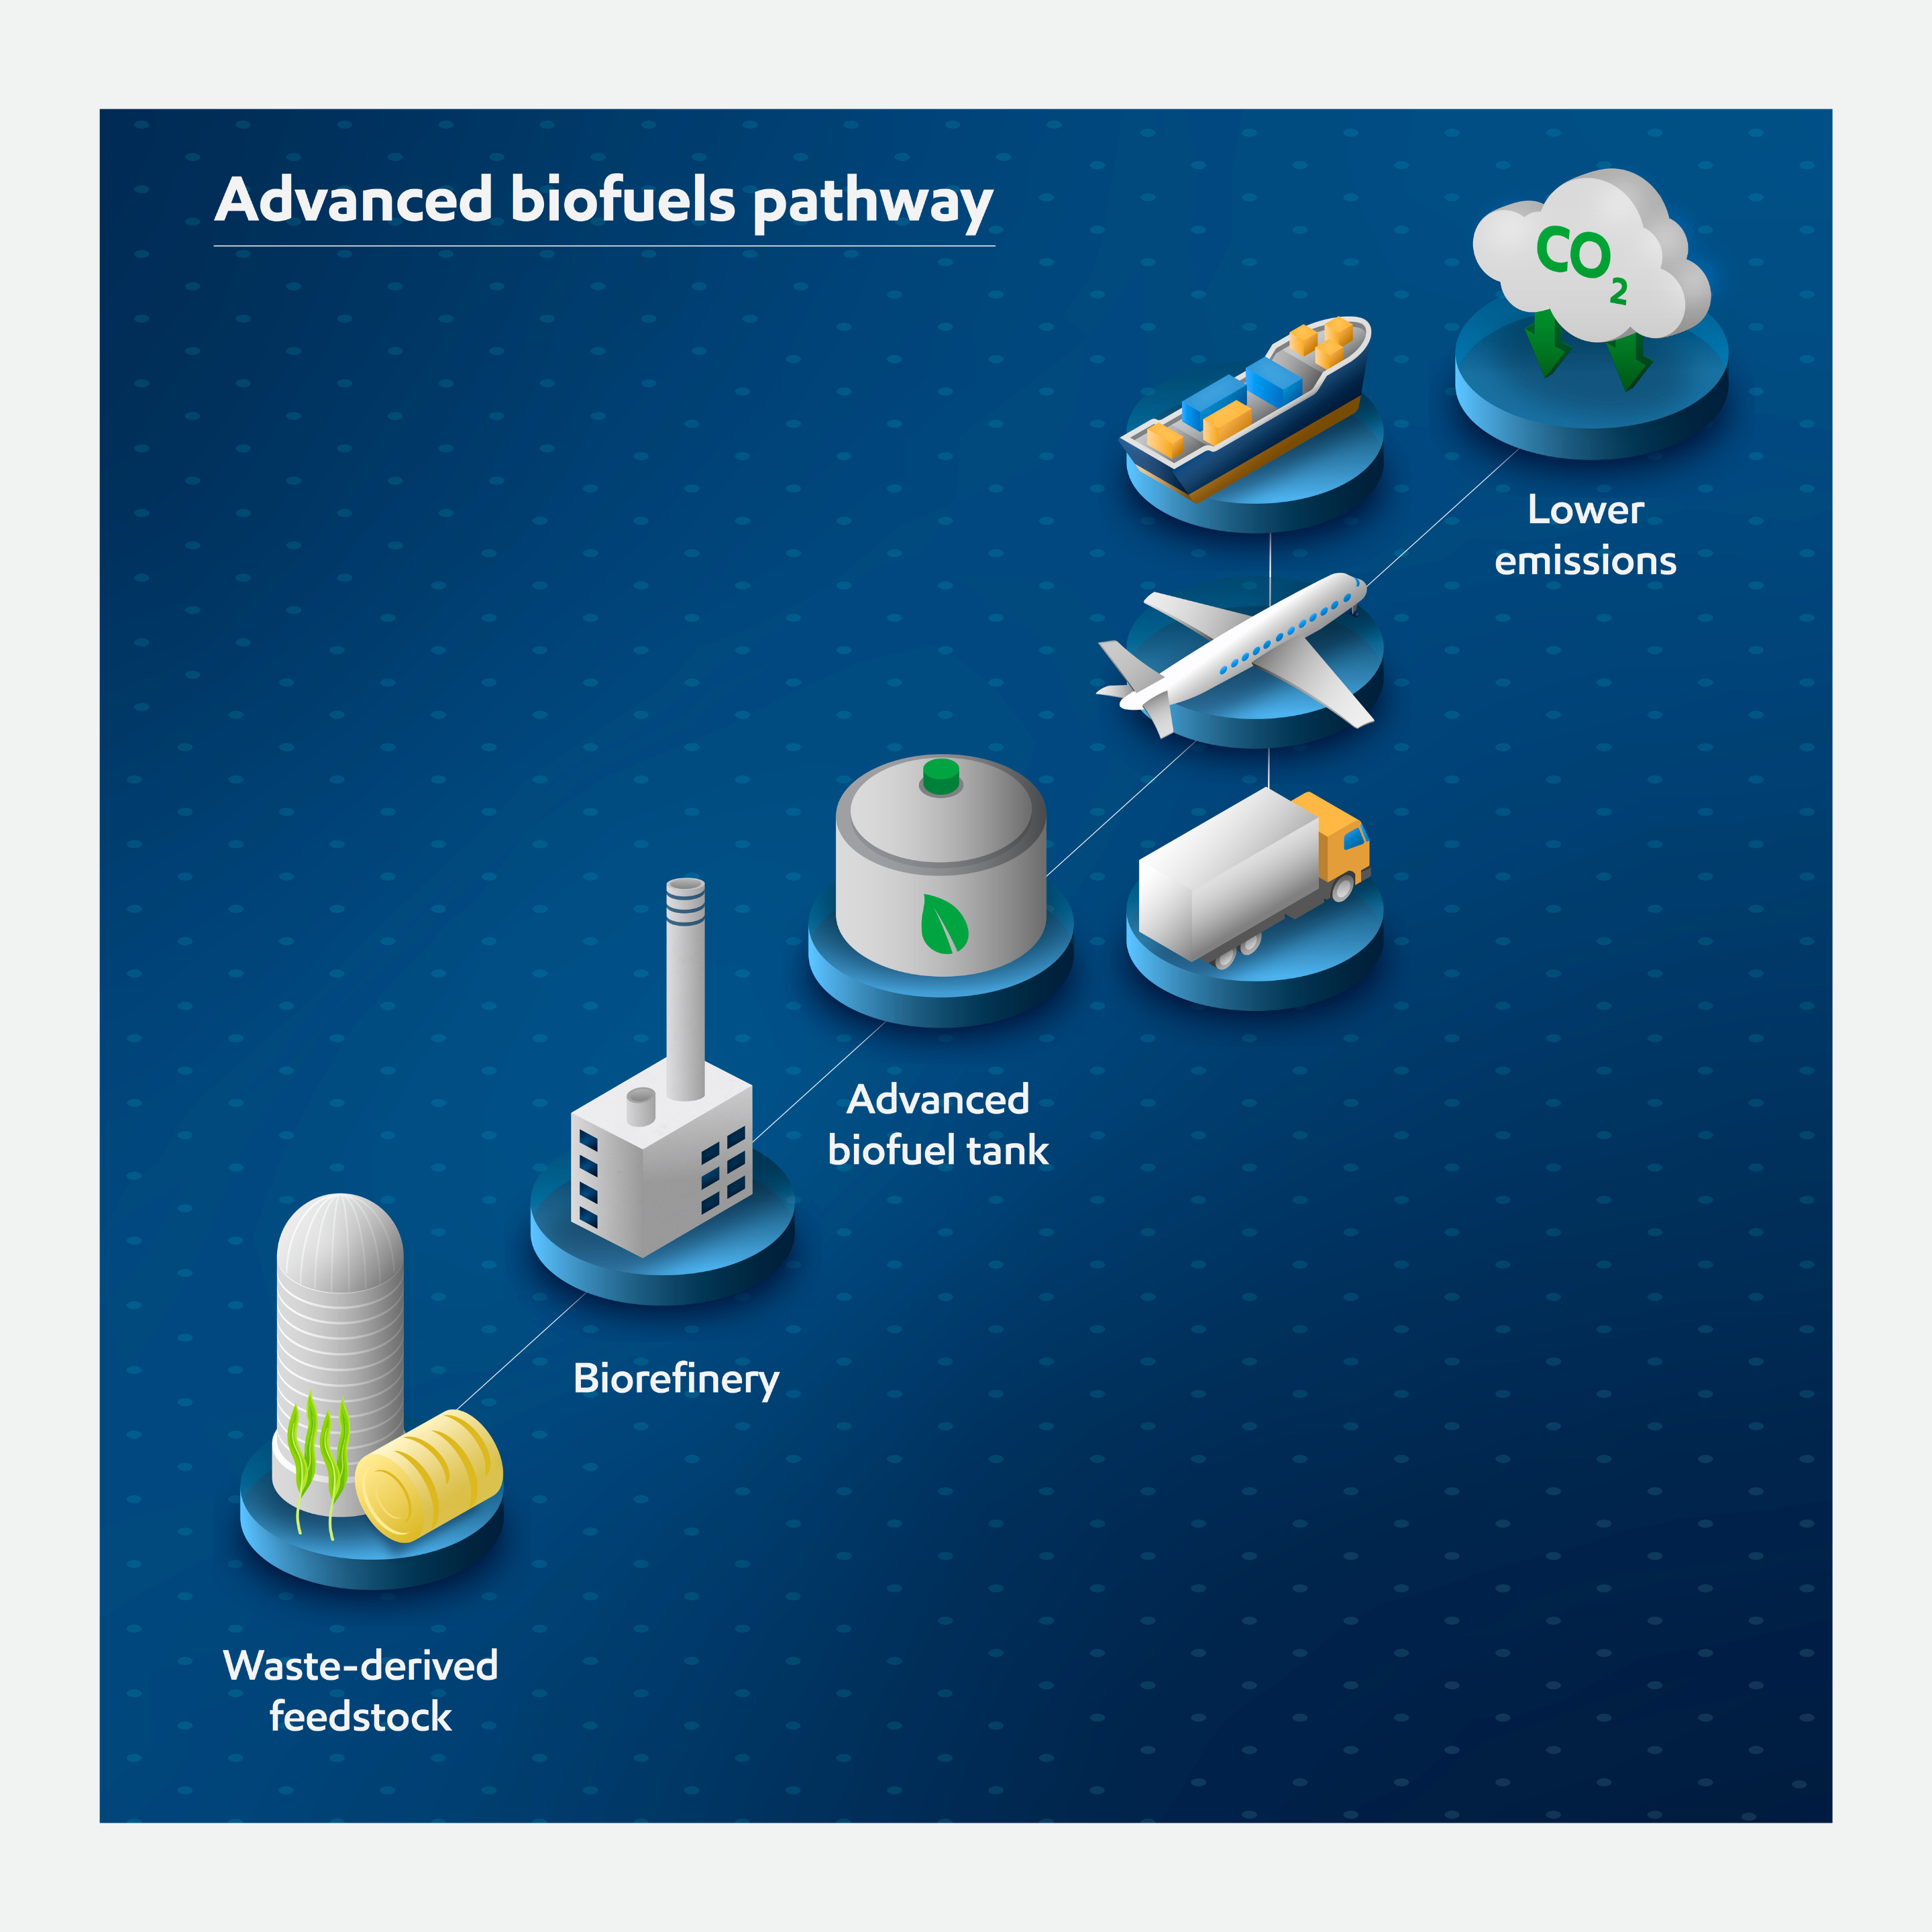 Advanced biofuels pathway